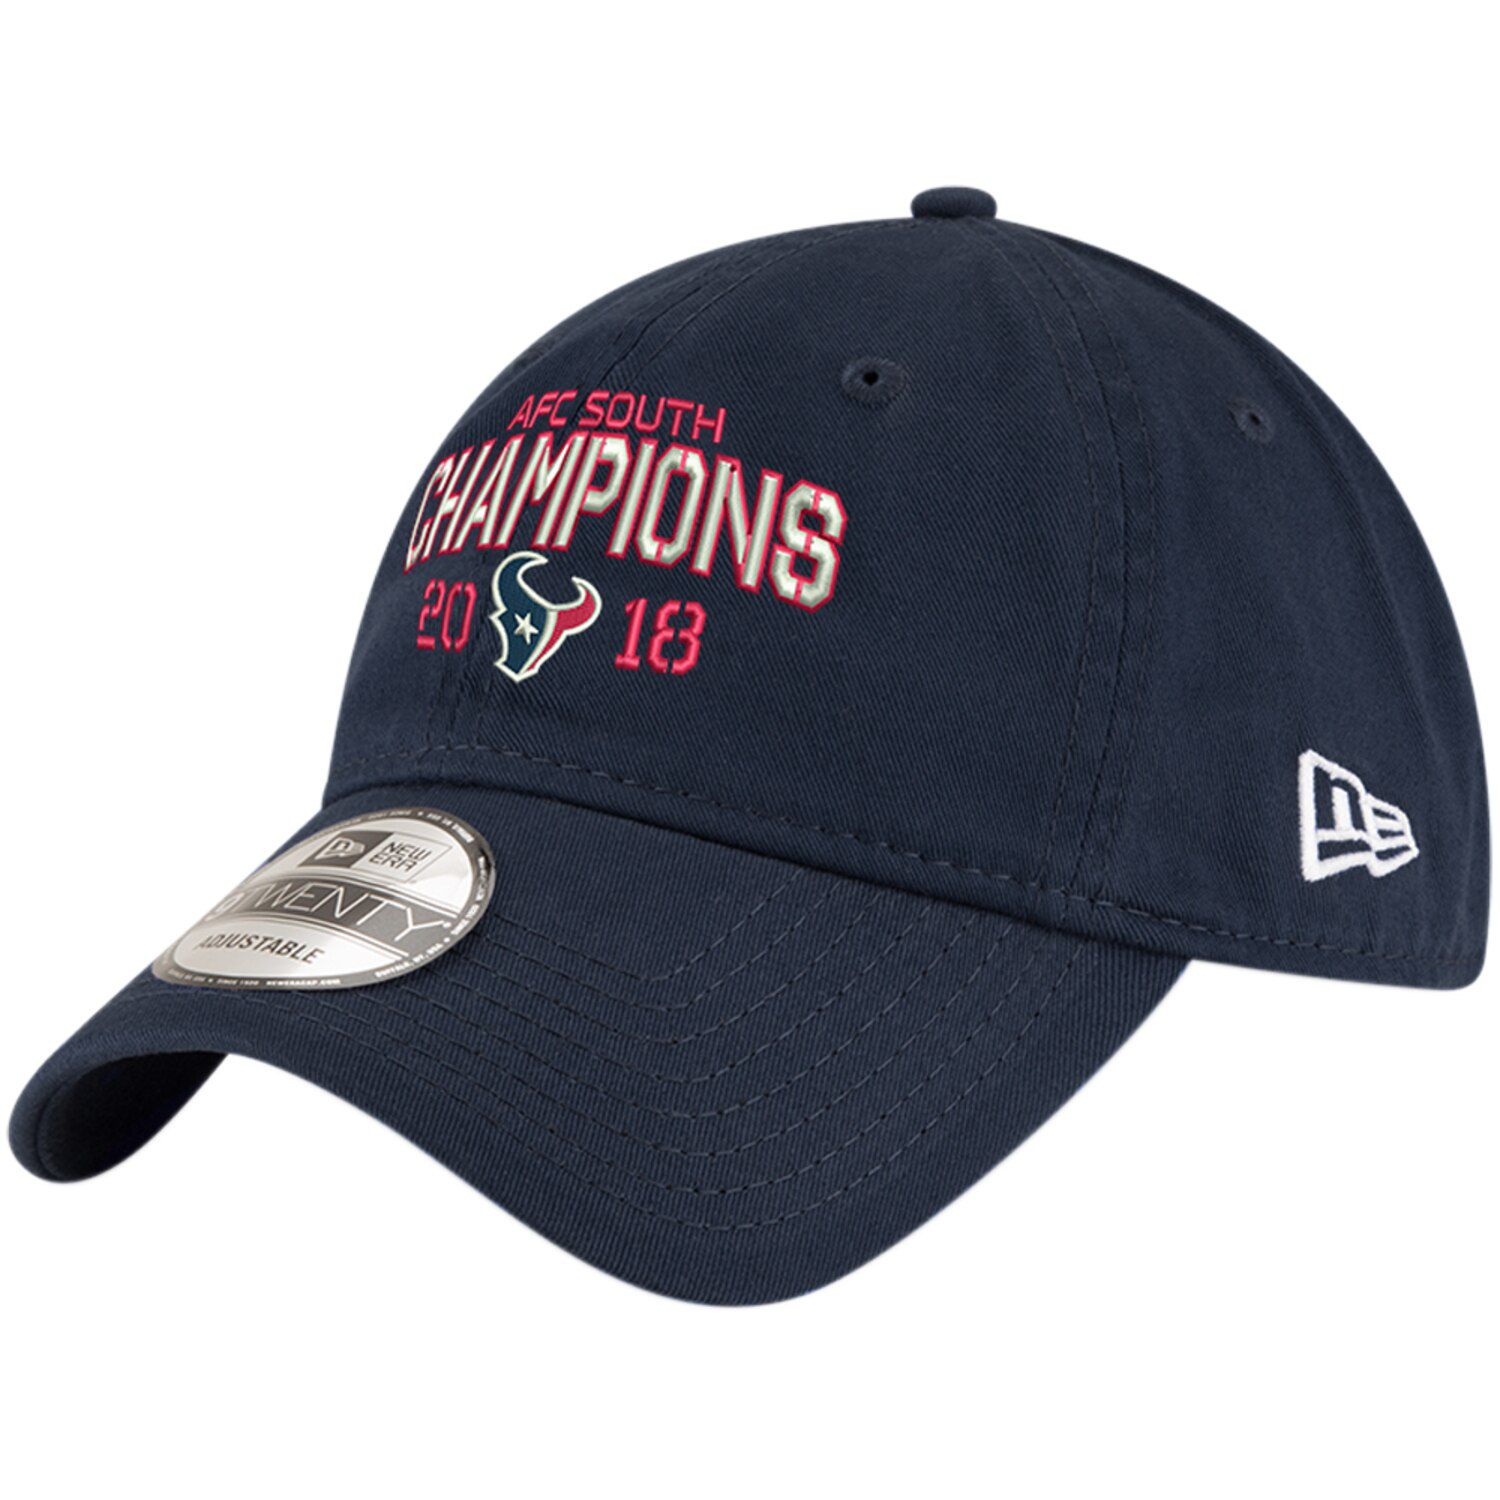 texans division champions hat